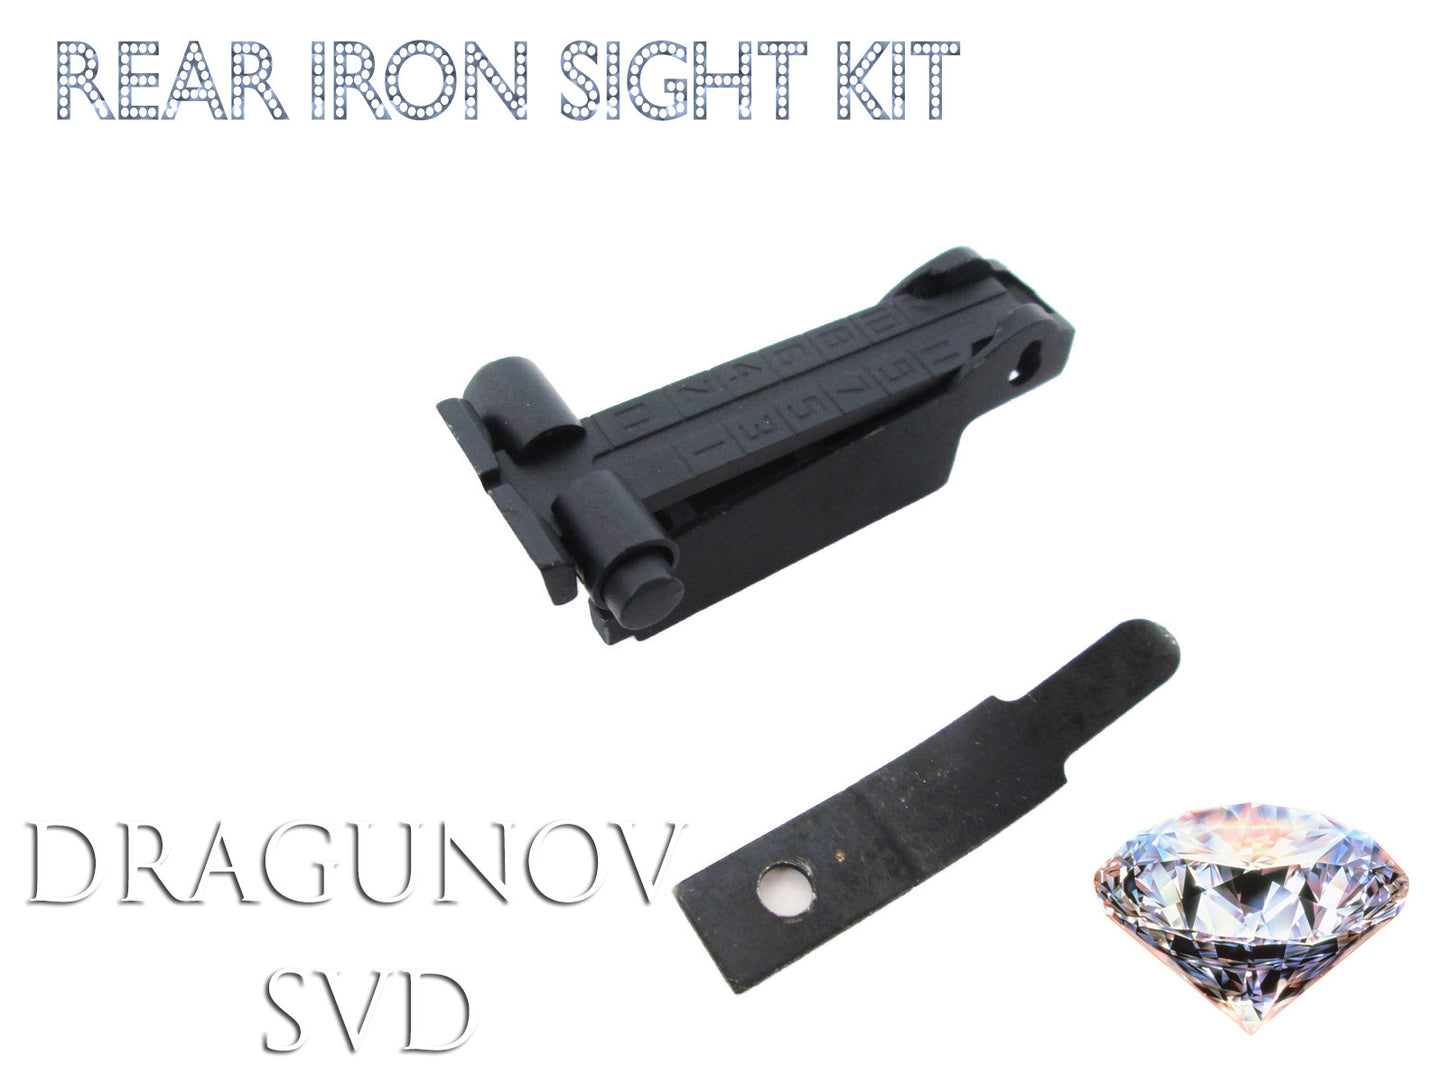 Dragunov SVD Rear Sight Assembly Kit - Airsoft